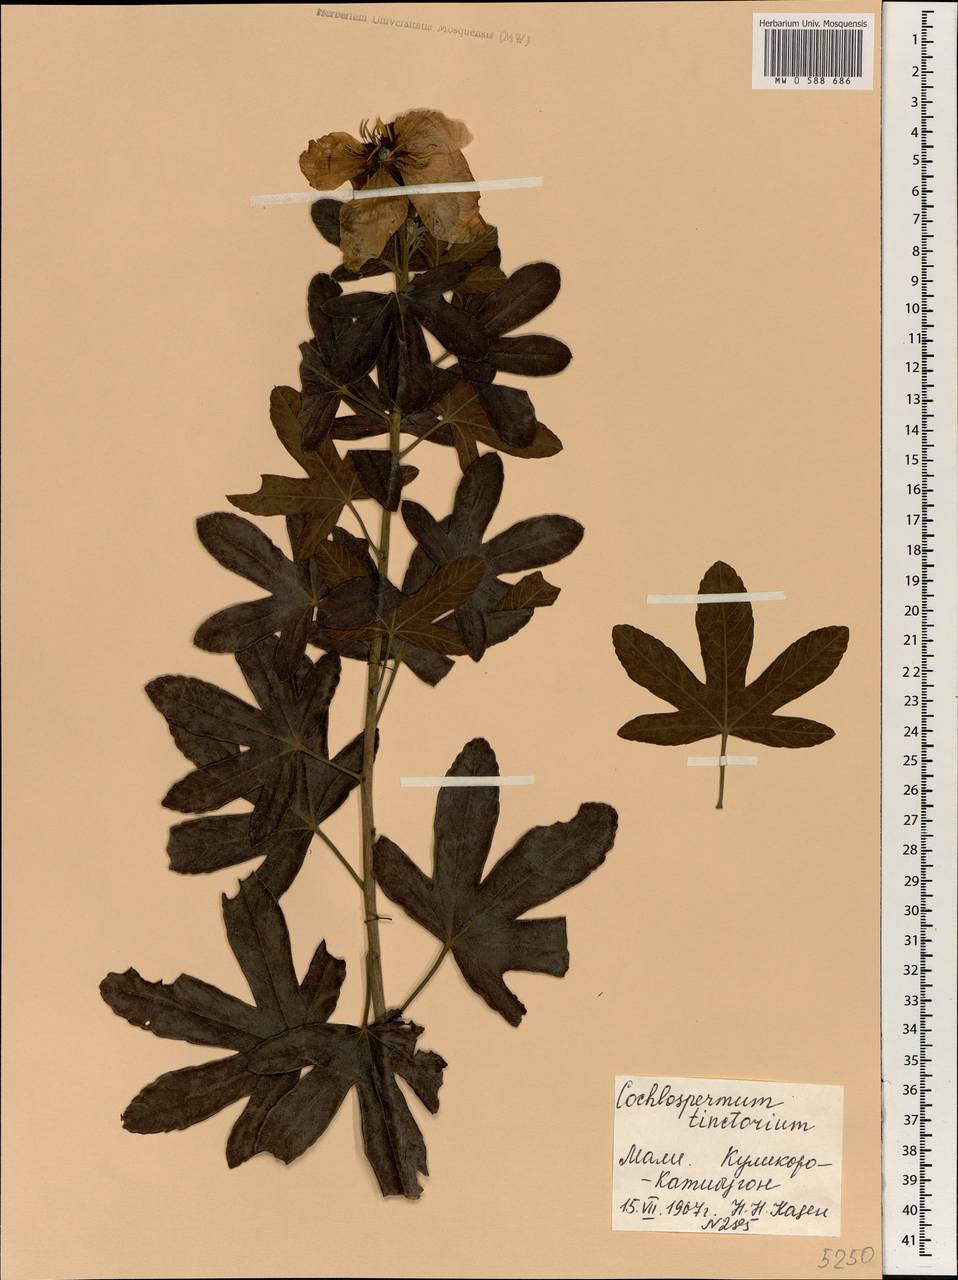 Cochlospermum tinctorium Perr. ex A. Rich., Africa (AFR) (Mali)